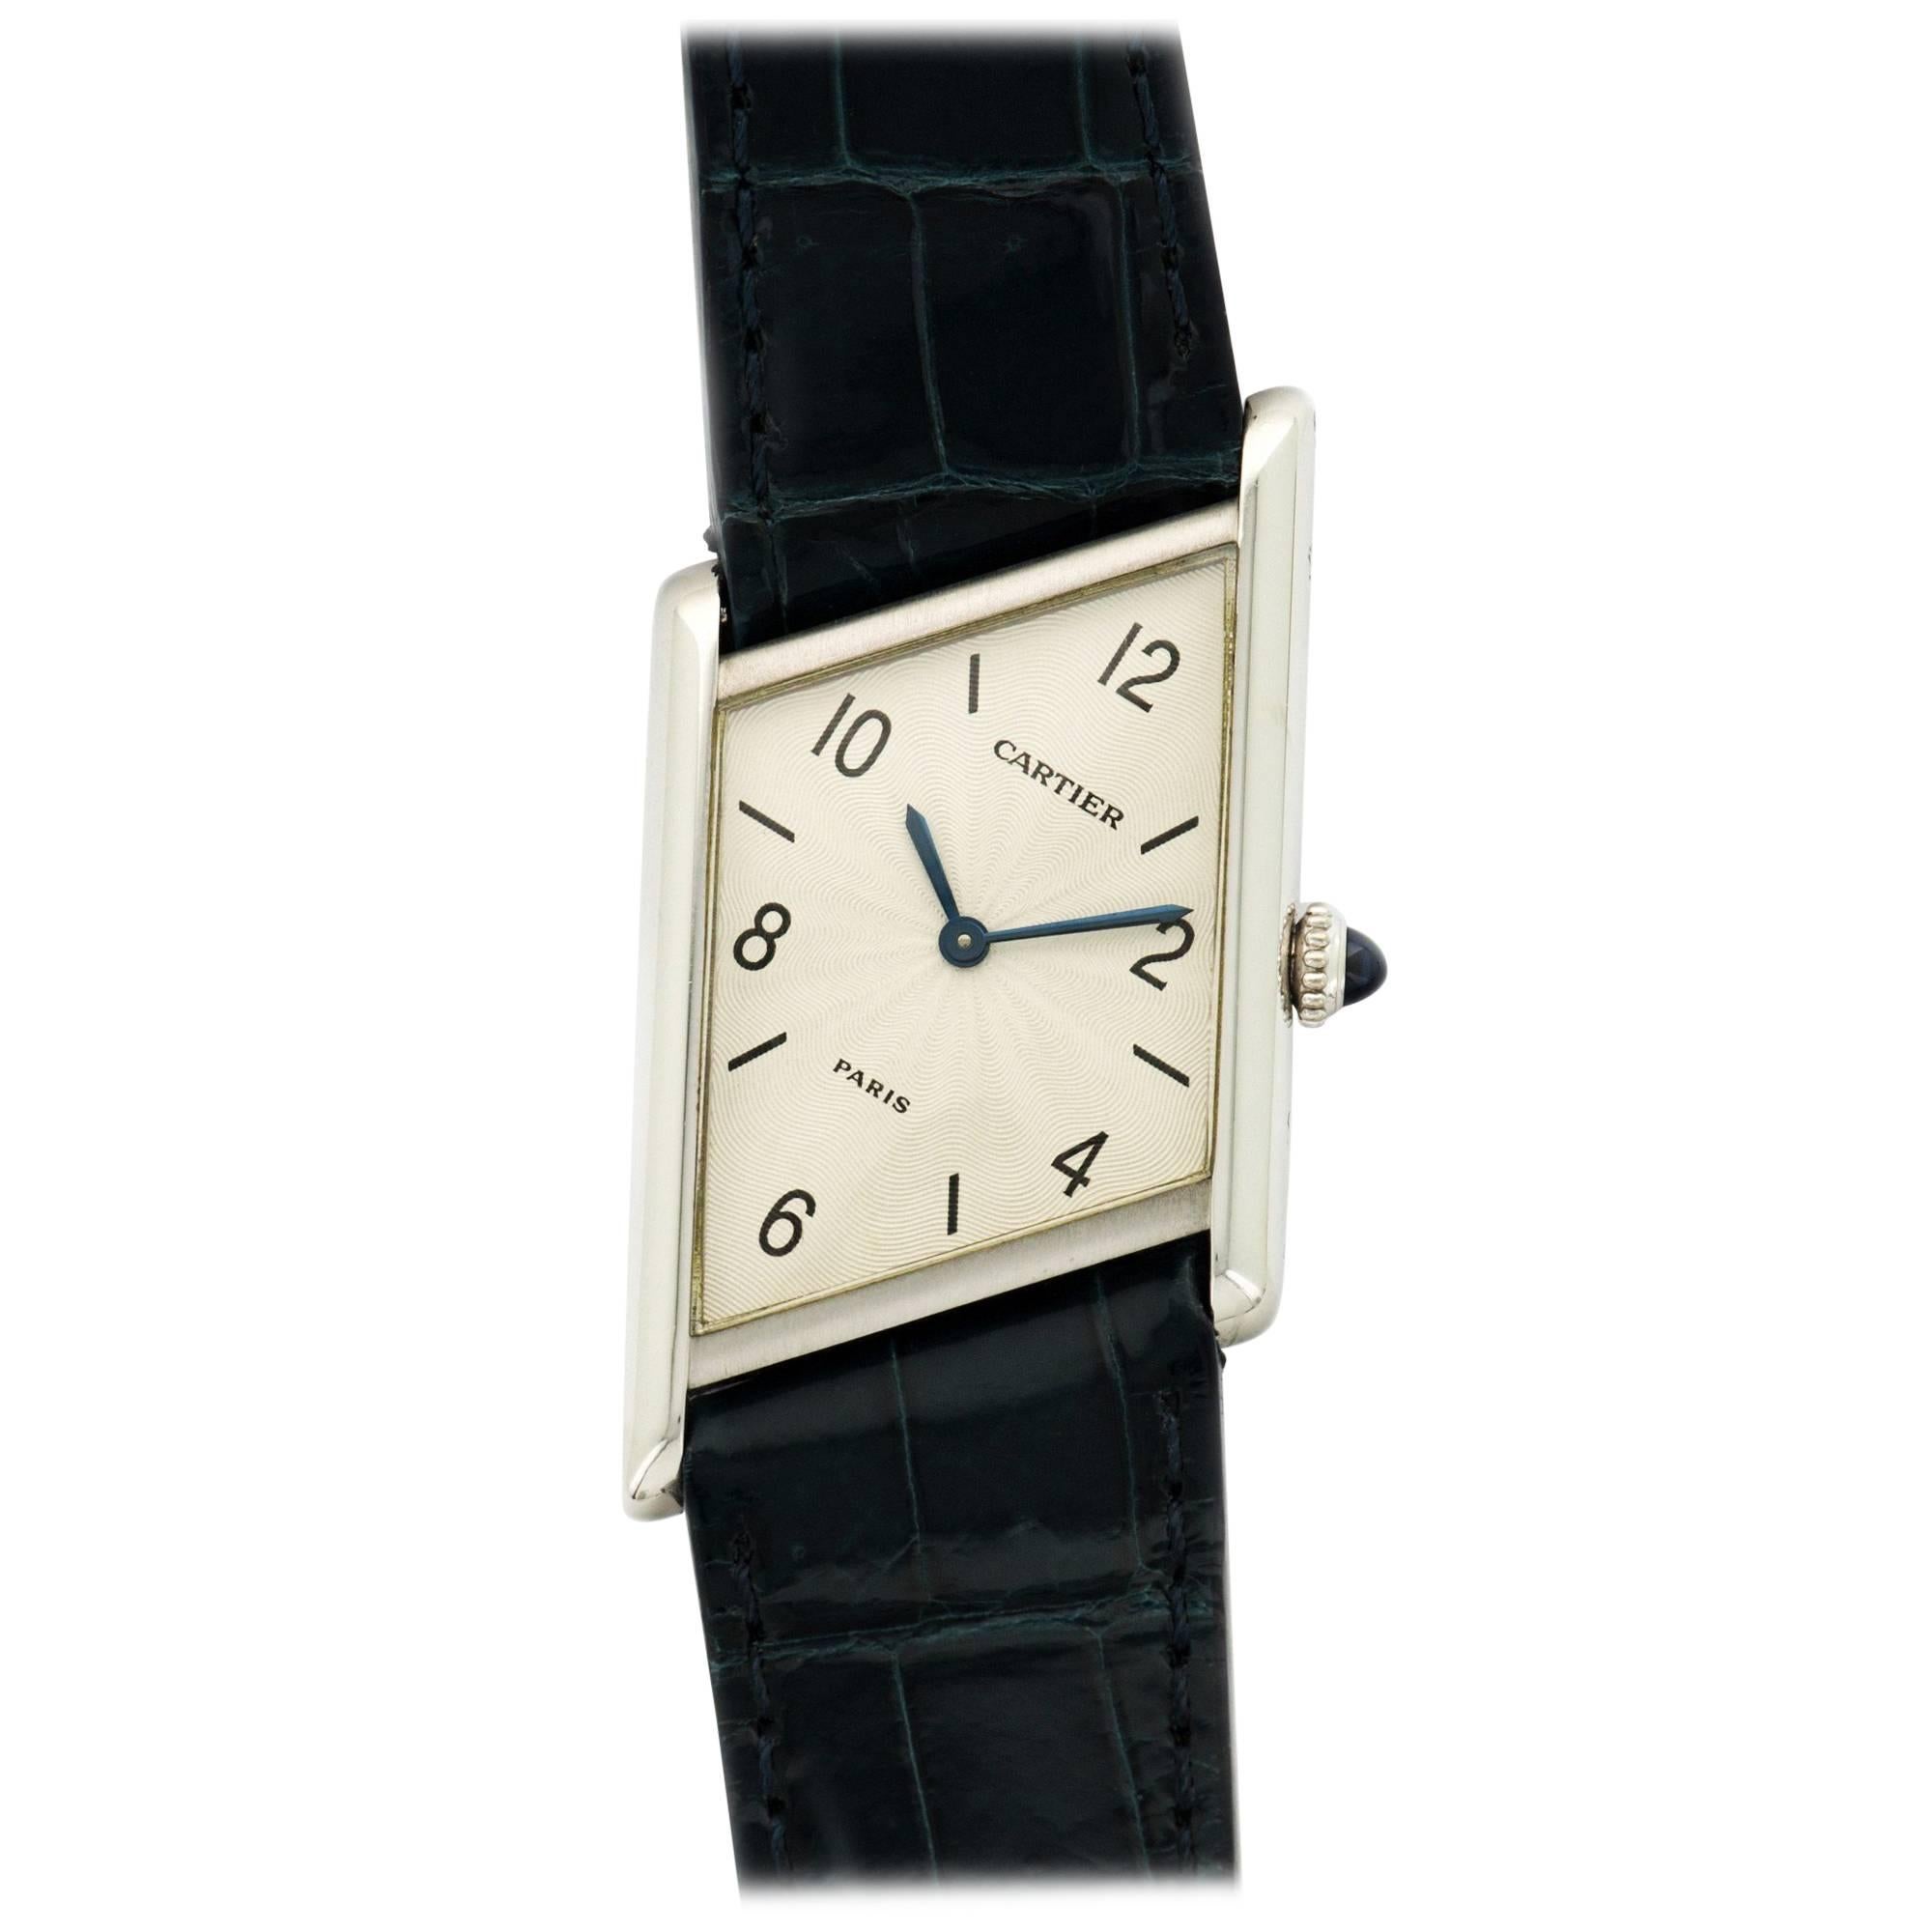 Cartier Platinum Asymmetric Tank Limited Edition Wristwatch, Ref 1996